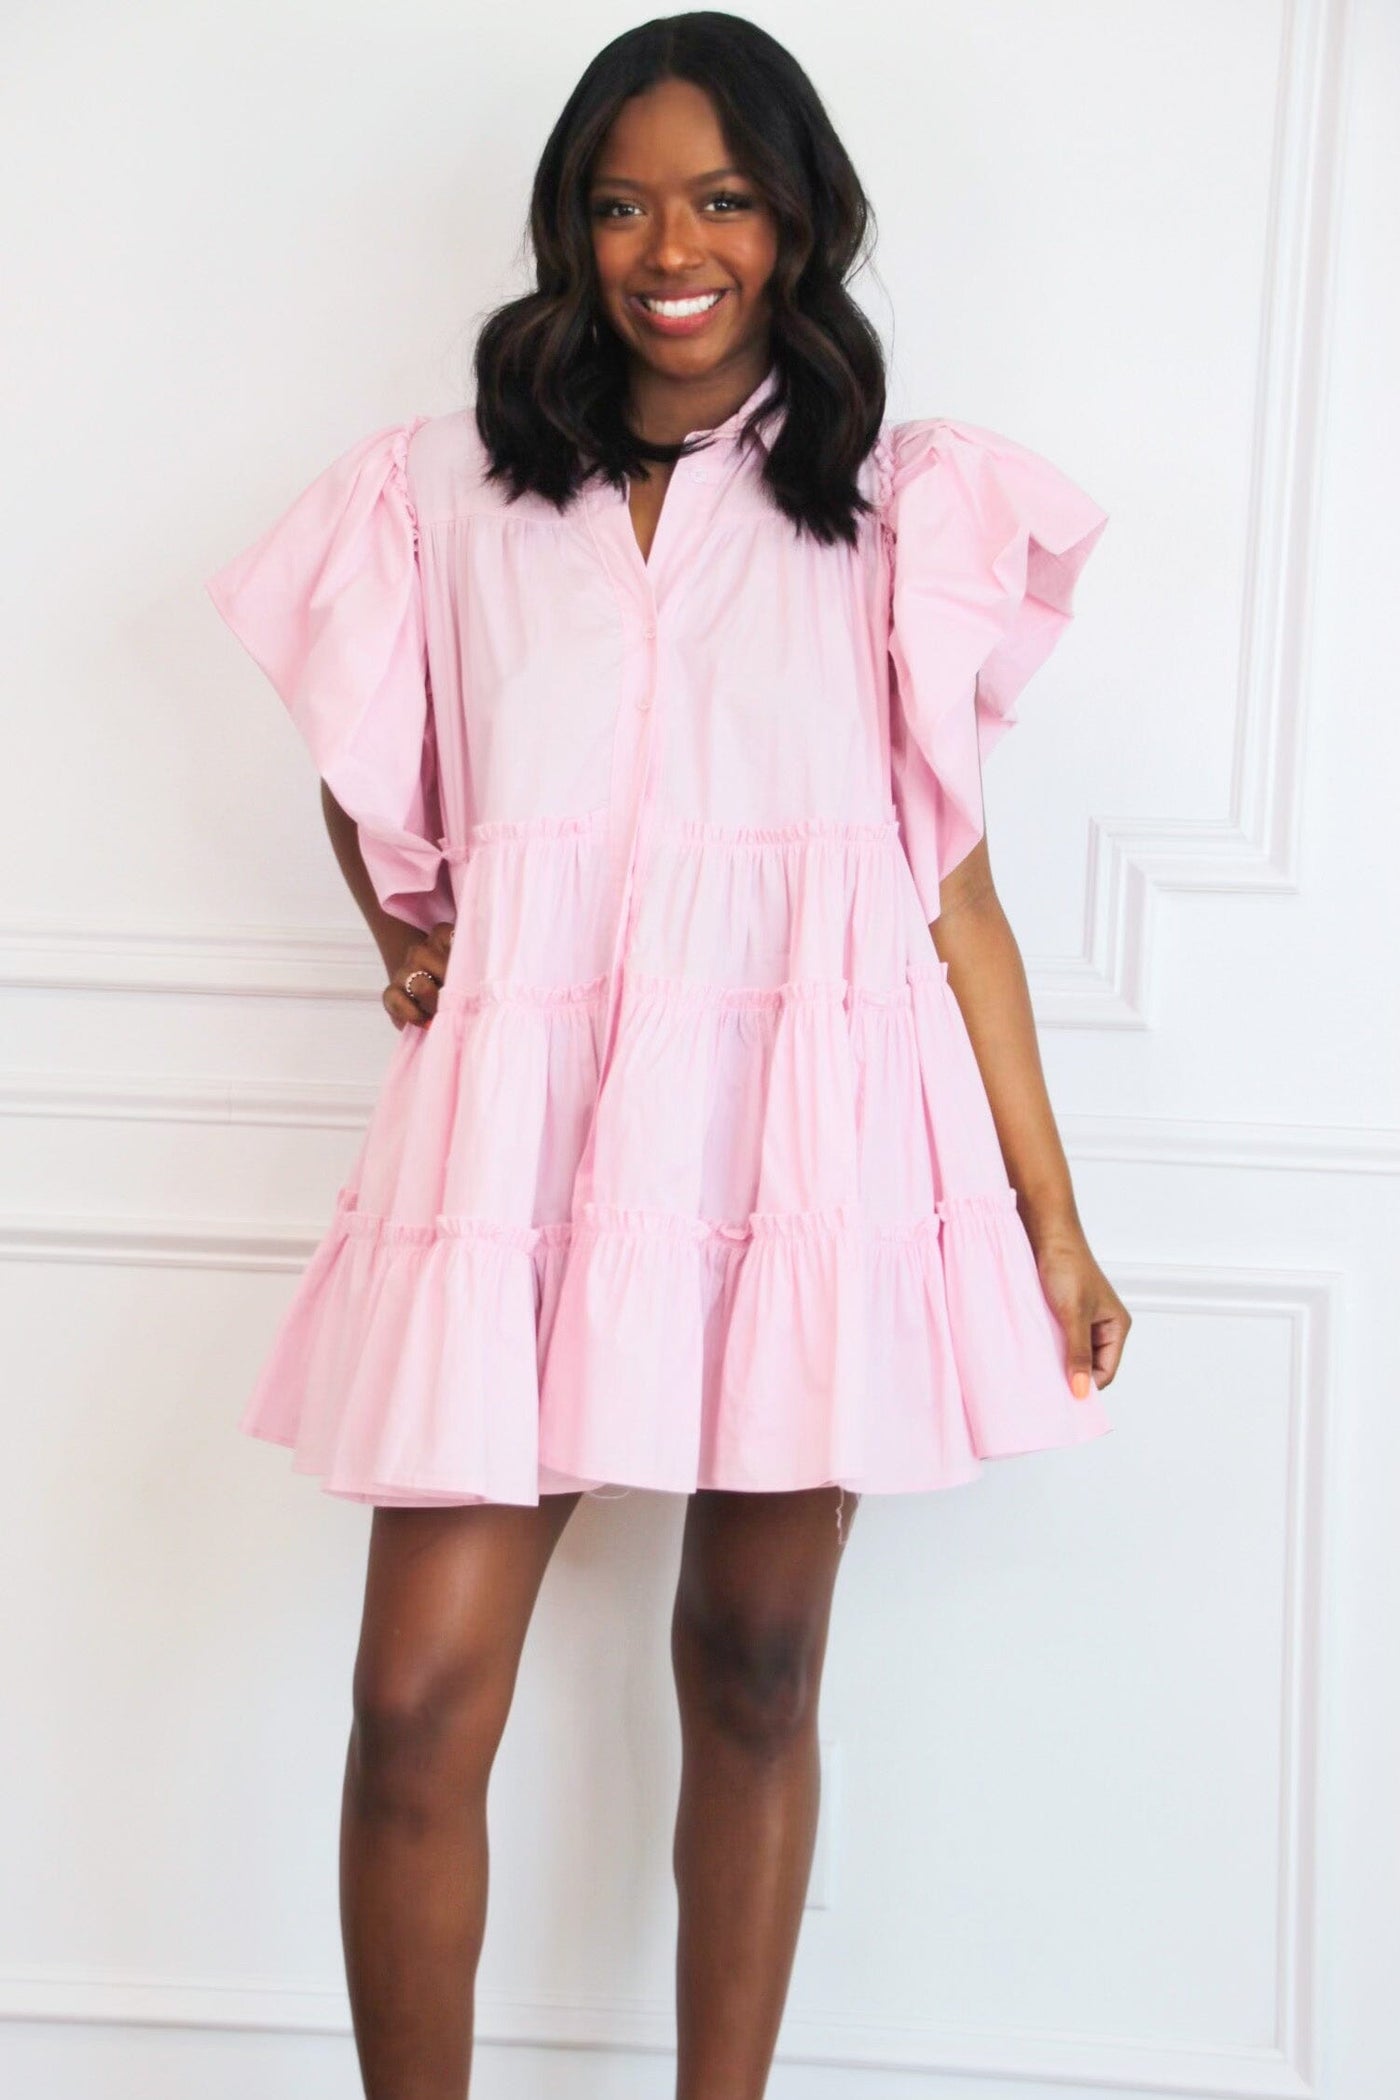 Free Spirit Dress: Light Pink - Bella and Bloom Boutique